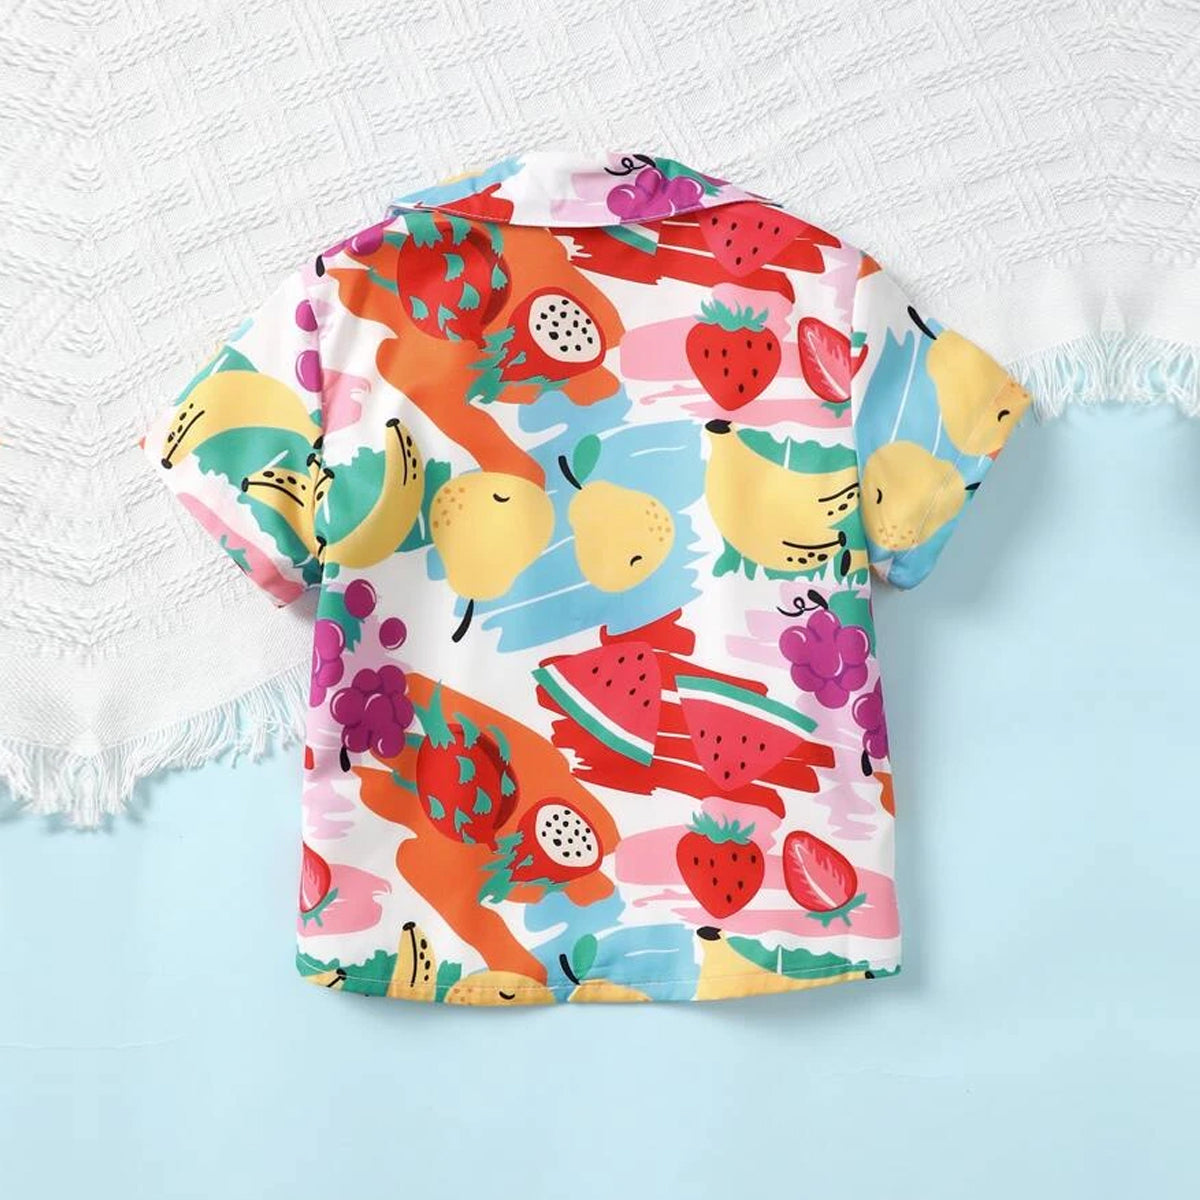 Venutaloza Boy's Graphic Fruits Print Short Sleeve Shirt For Boy.